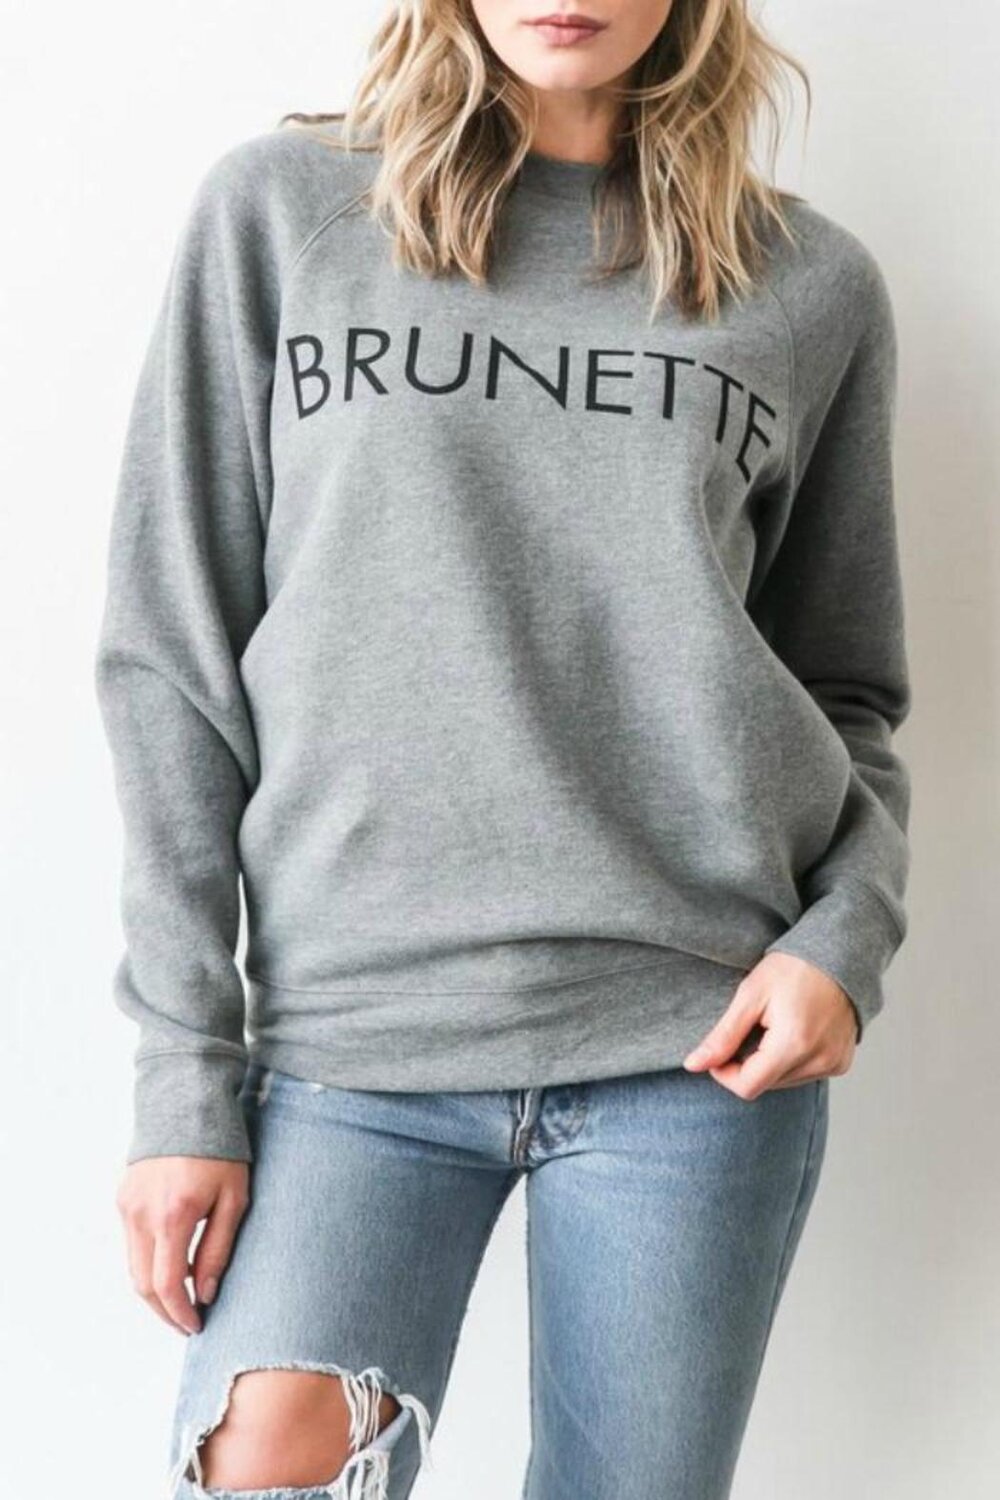 Pre-loved, Brunette the Label Blonde Crew